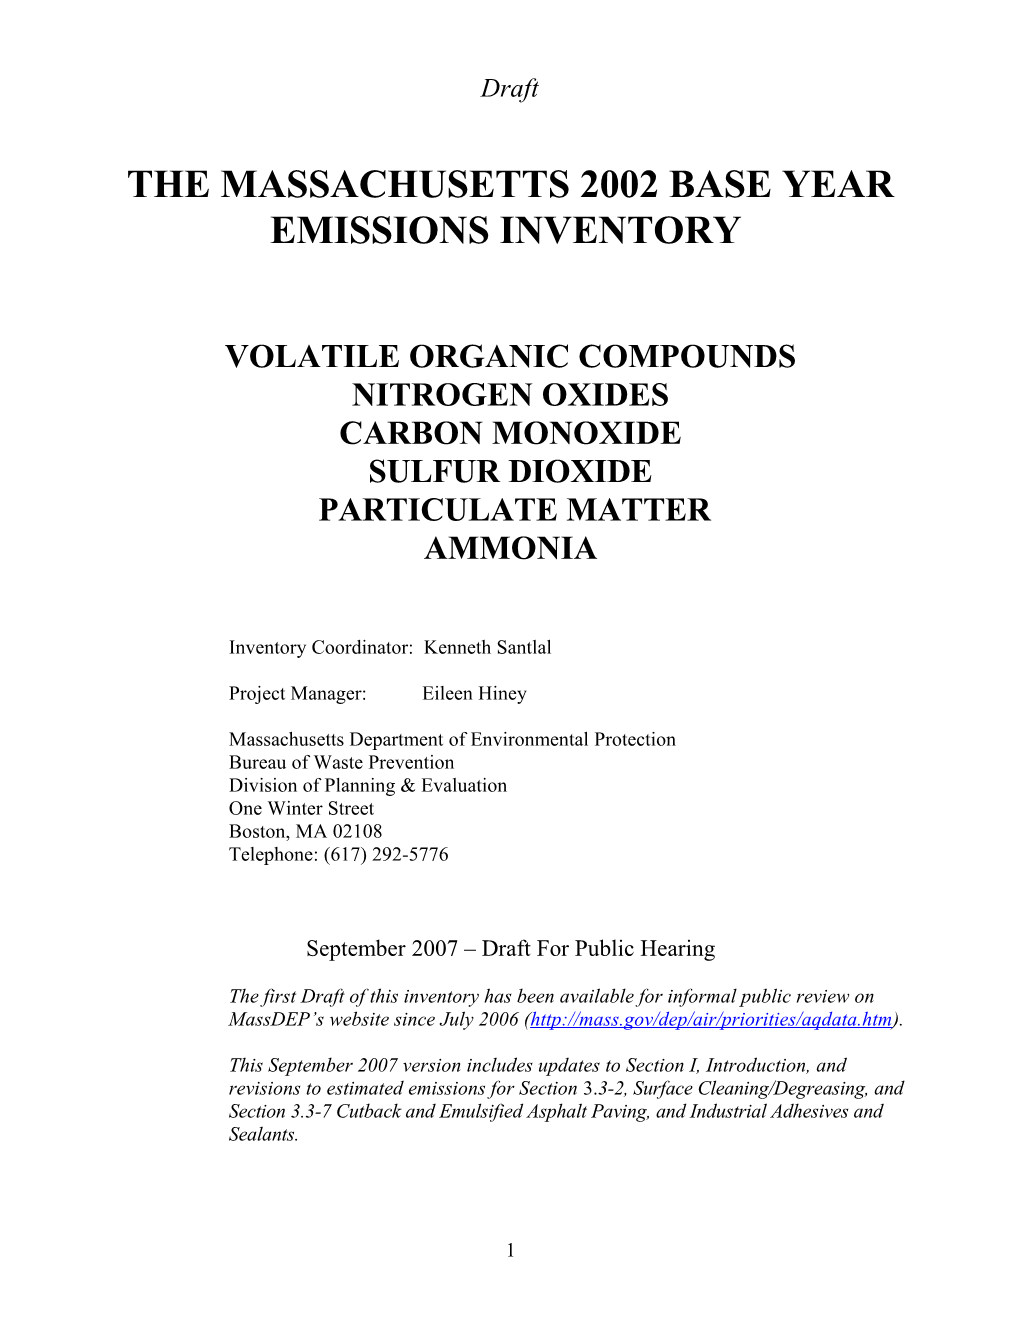 The Massachusetts 2002 Base Year